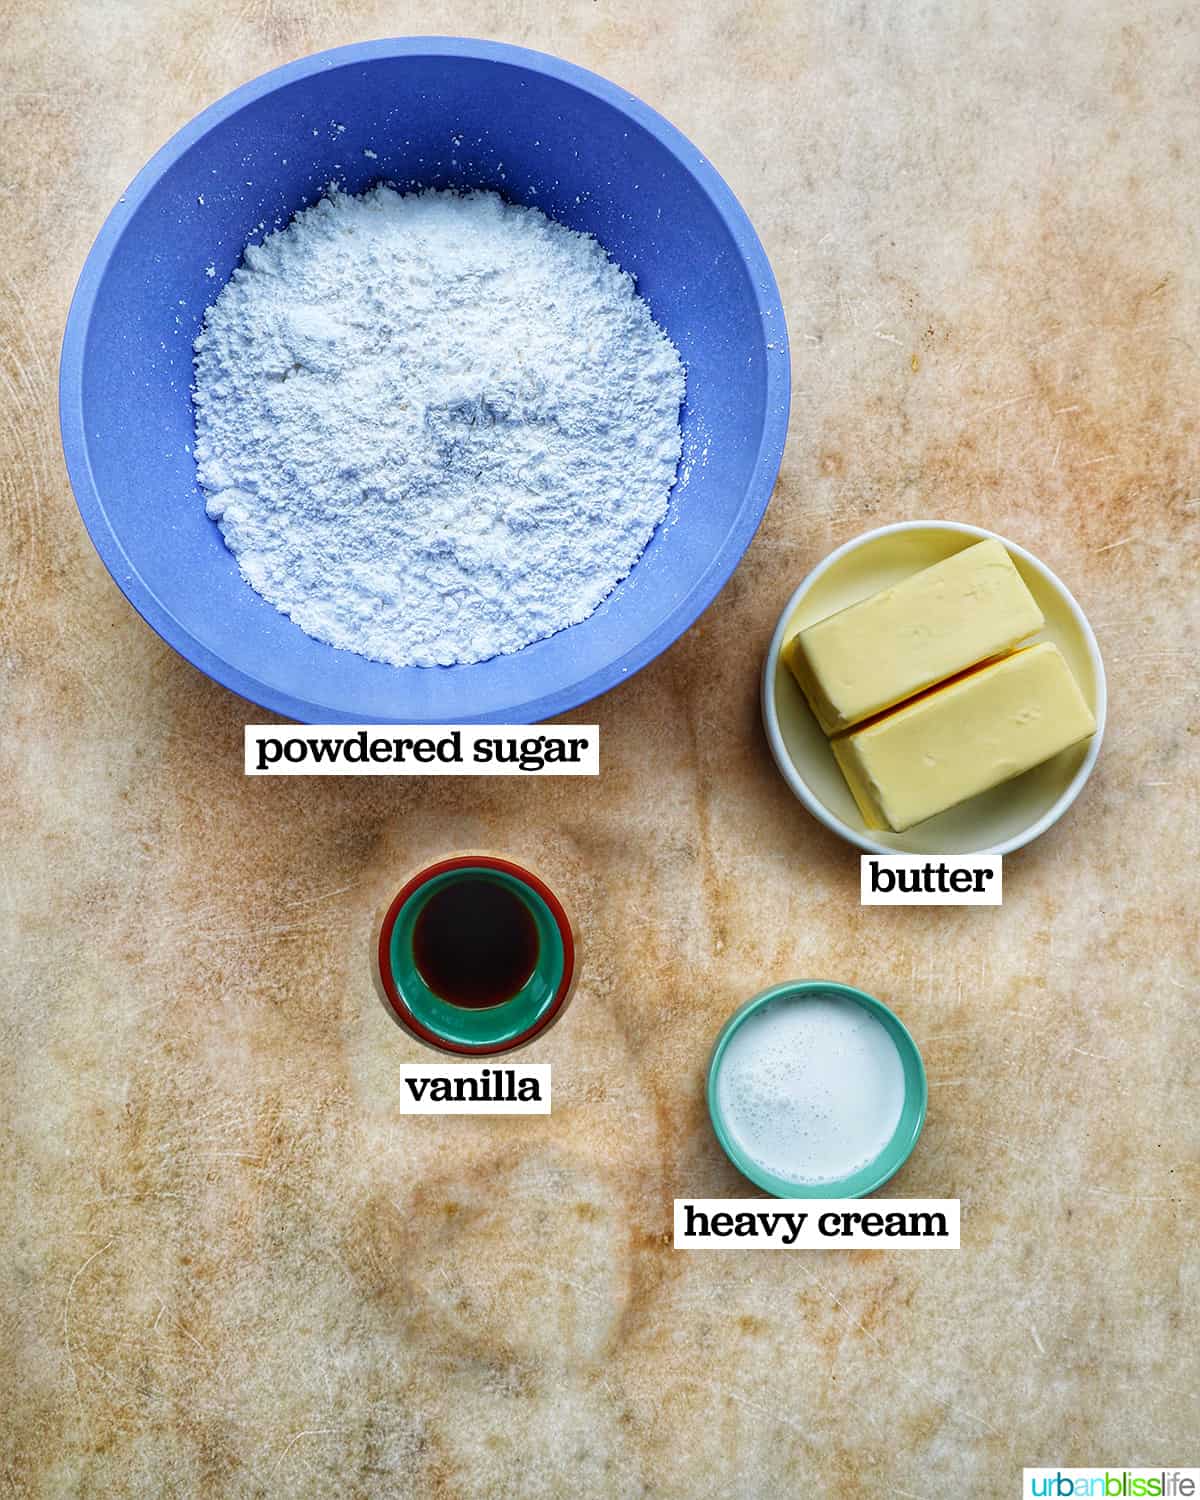 ingredients to make vanilla buttercream frosting: powdered sugar, butter, vanilla, and cream.